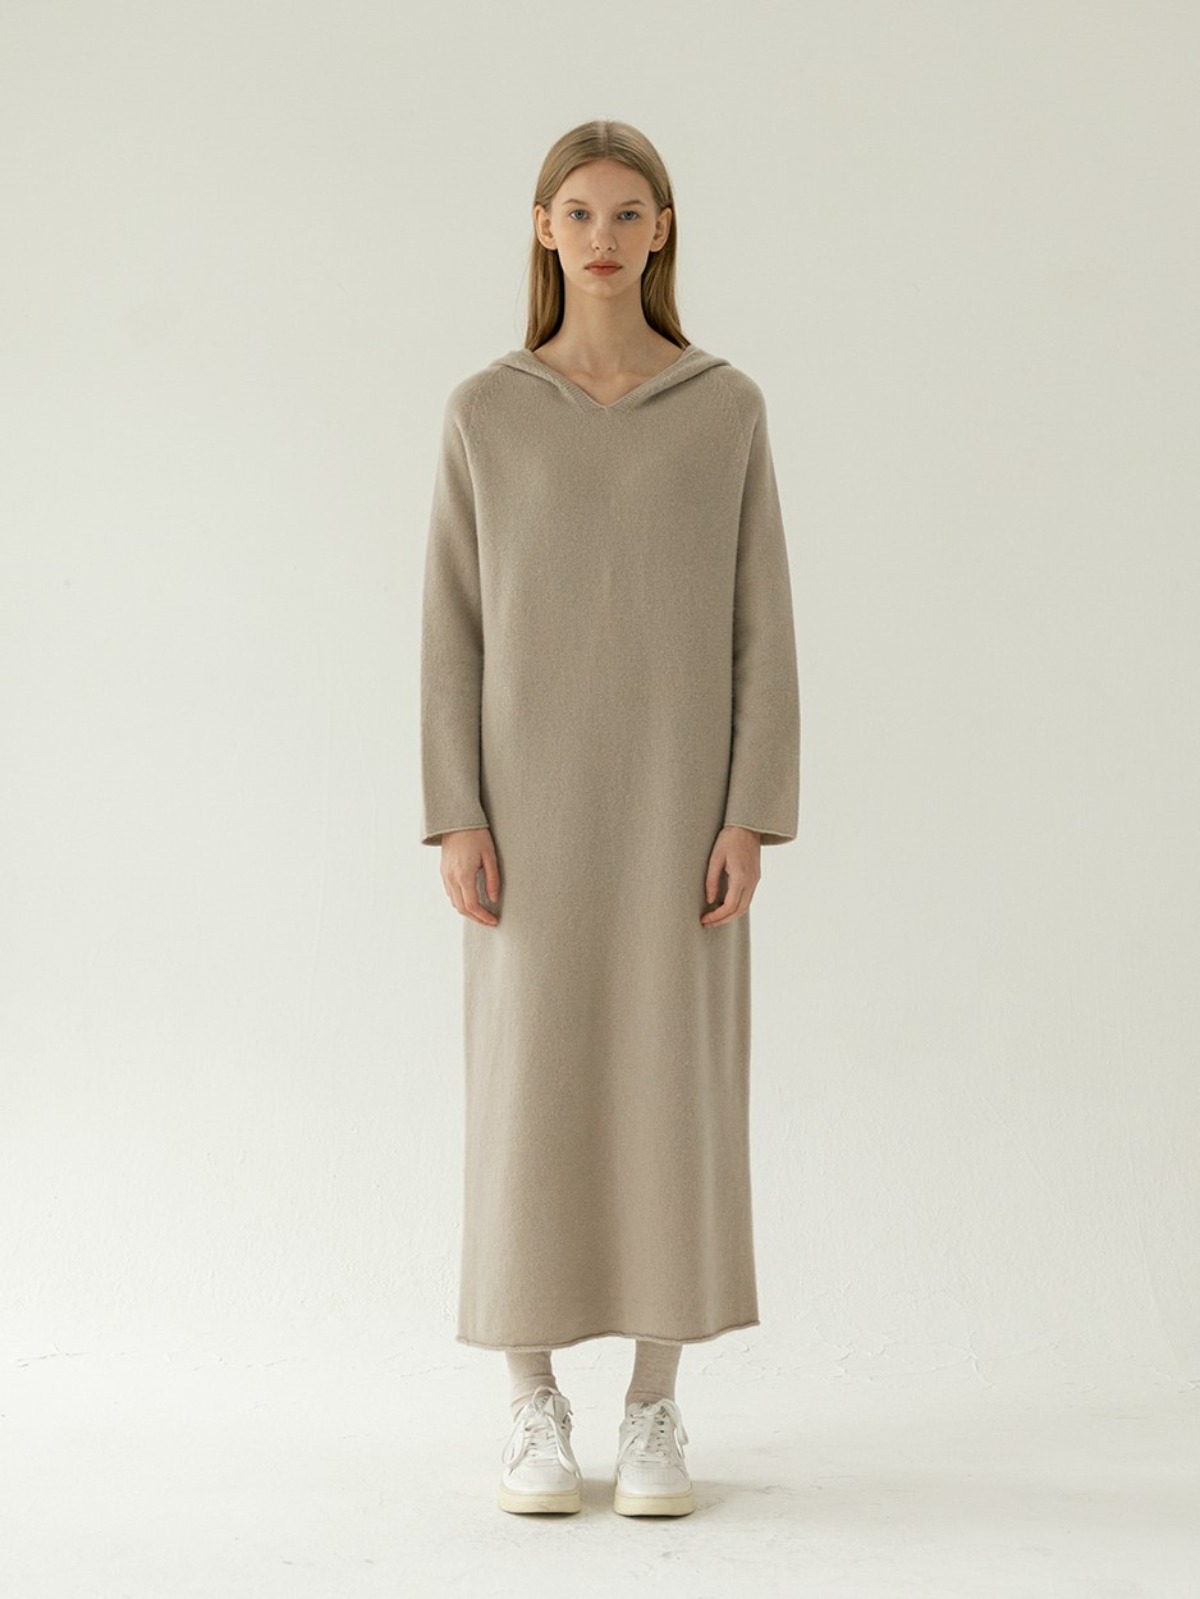 Whole Garment Air Soft Wool Knit Hooded Dress